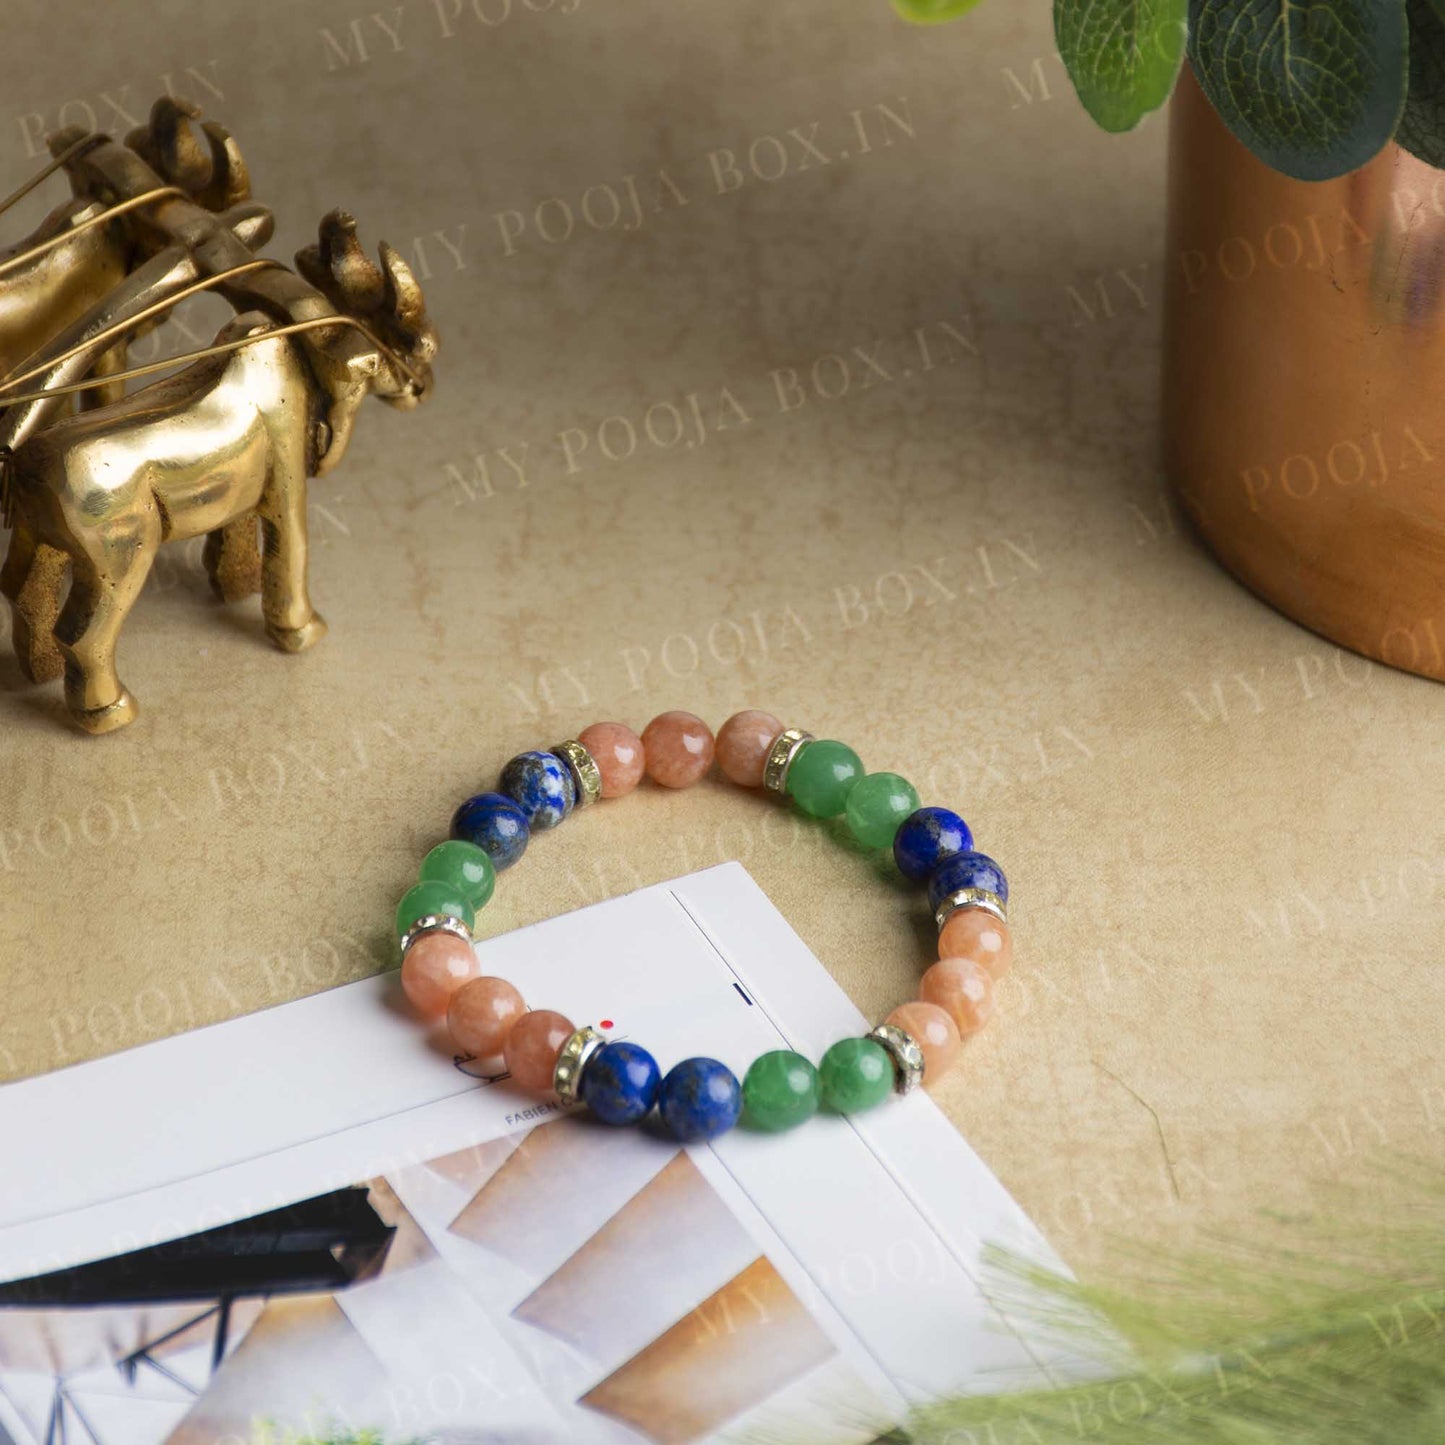 TCC™ Healing 7 Chakra Lava Bead Bracelet – The Click Cart